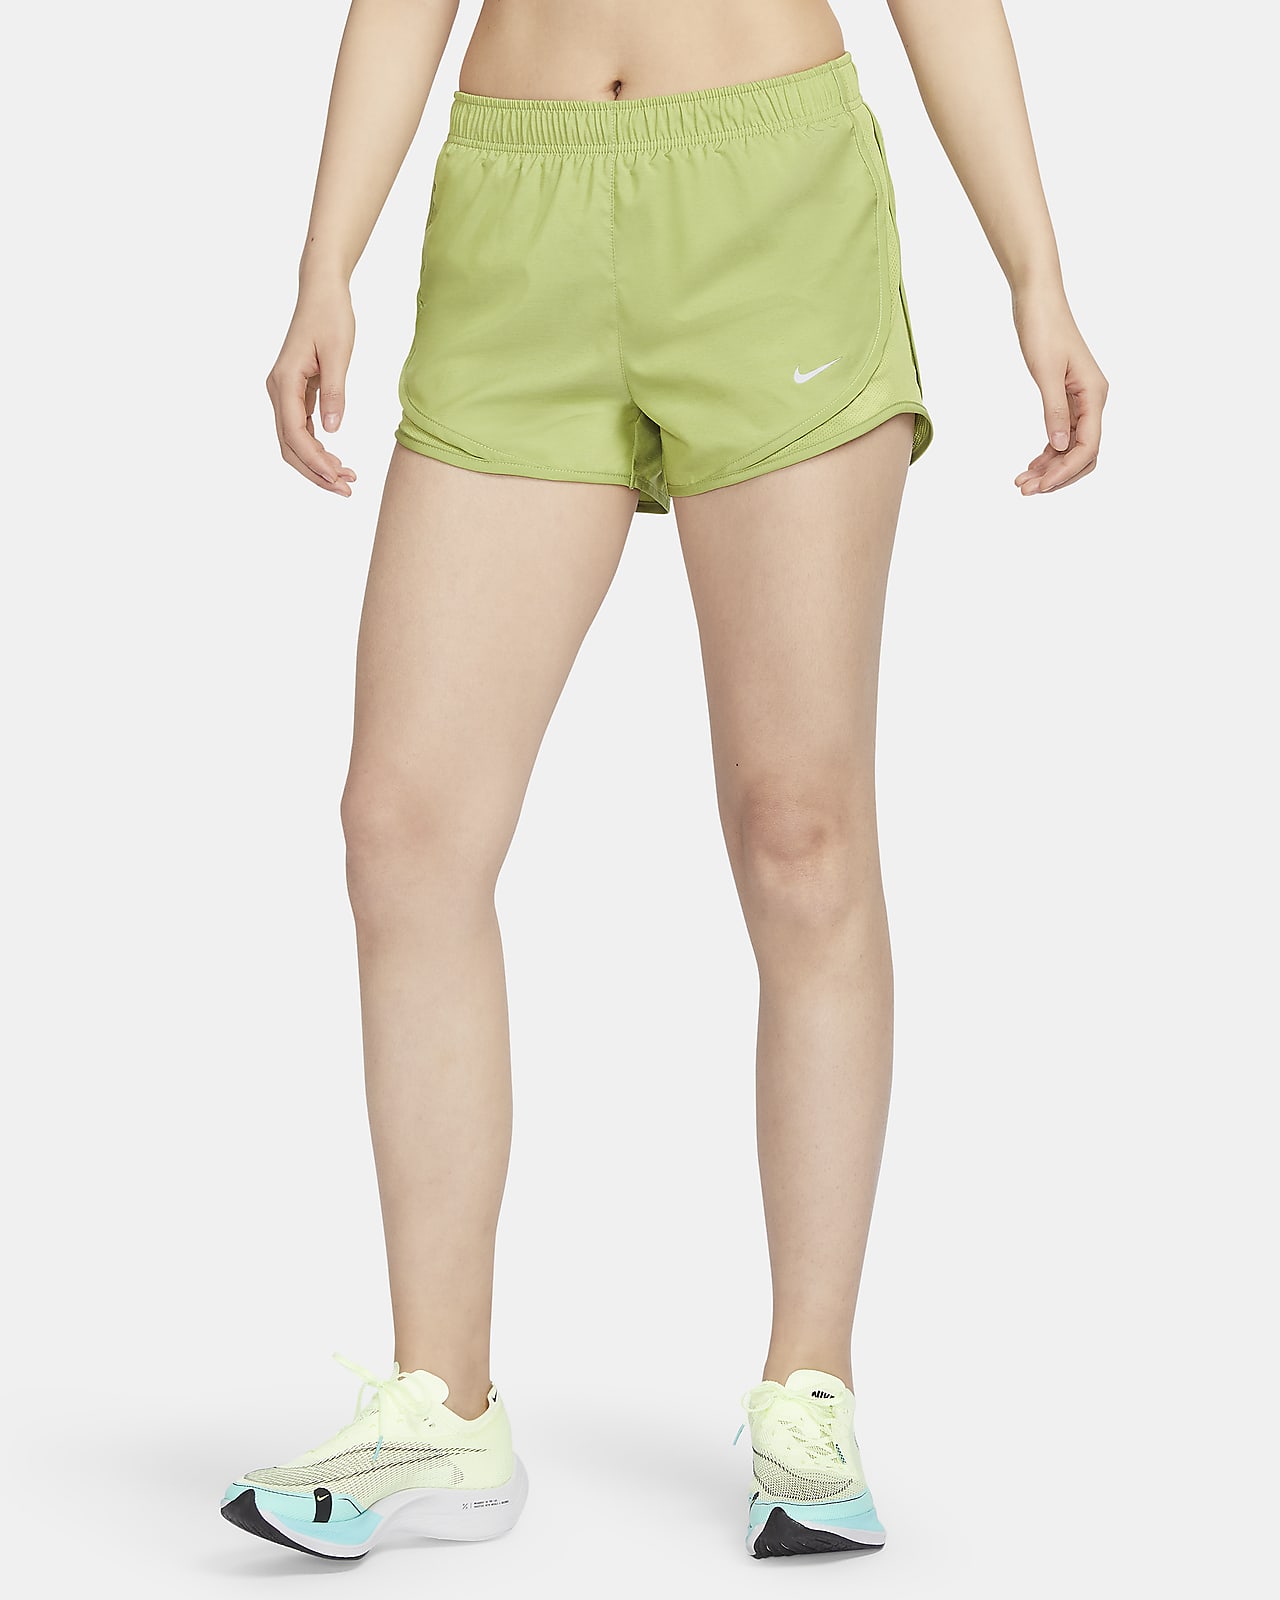 Women's Pineapple Express 1.5 Split Shorts  Running shorts women, Split  running shorts, Running shorts